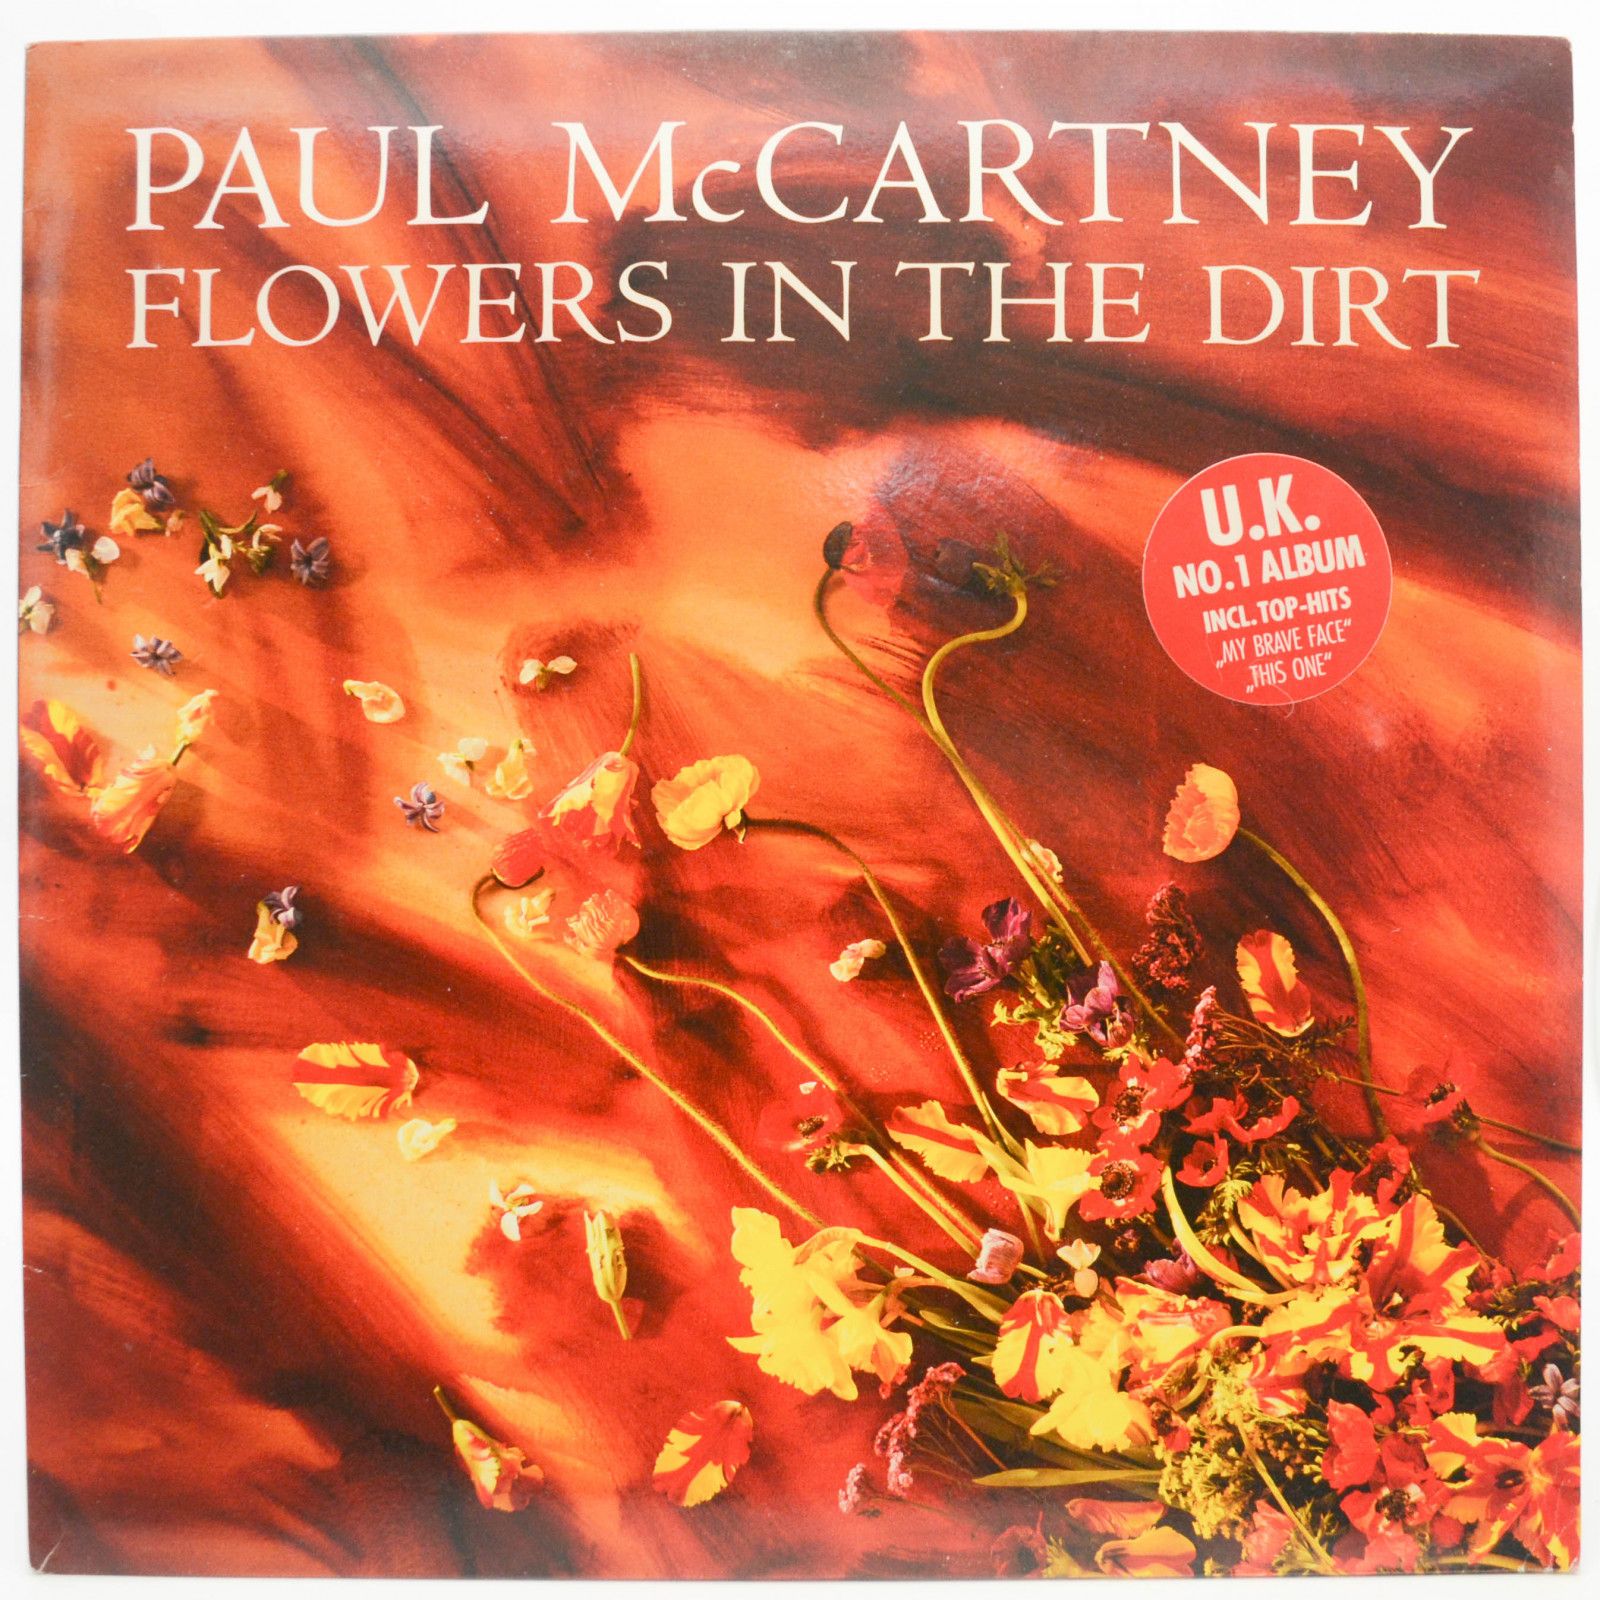 Paul McCartney — Flowers In The Dirt, 1989